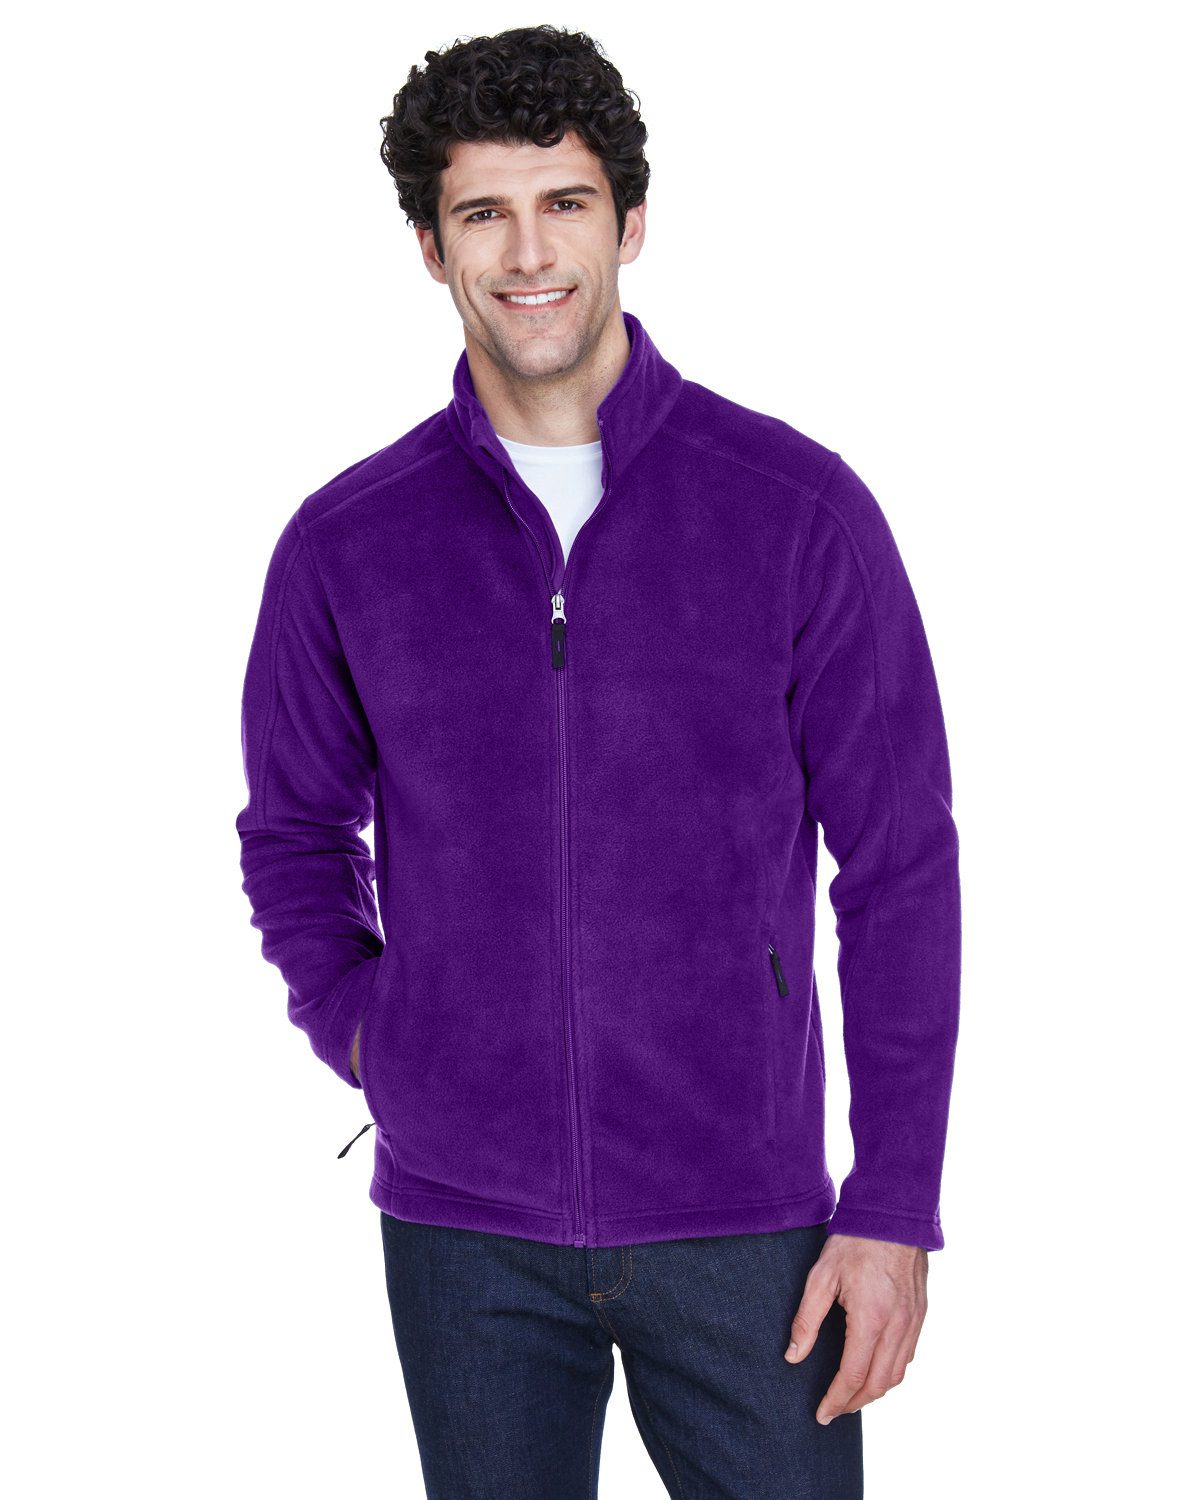 Core 365 Men's Journey Fleece Jacket #88190 Purple